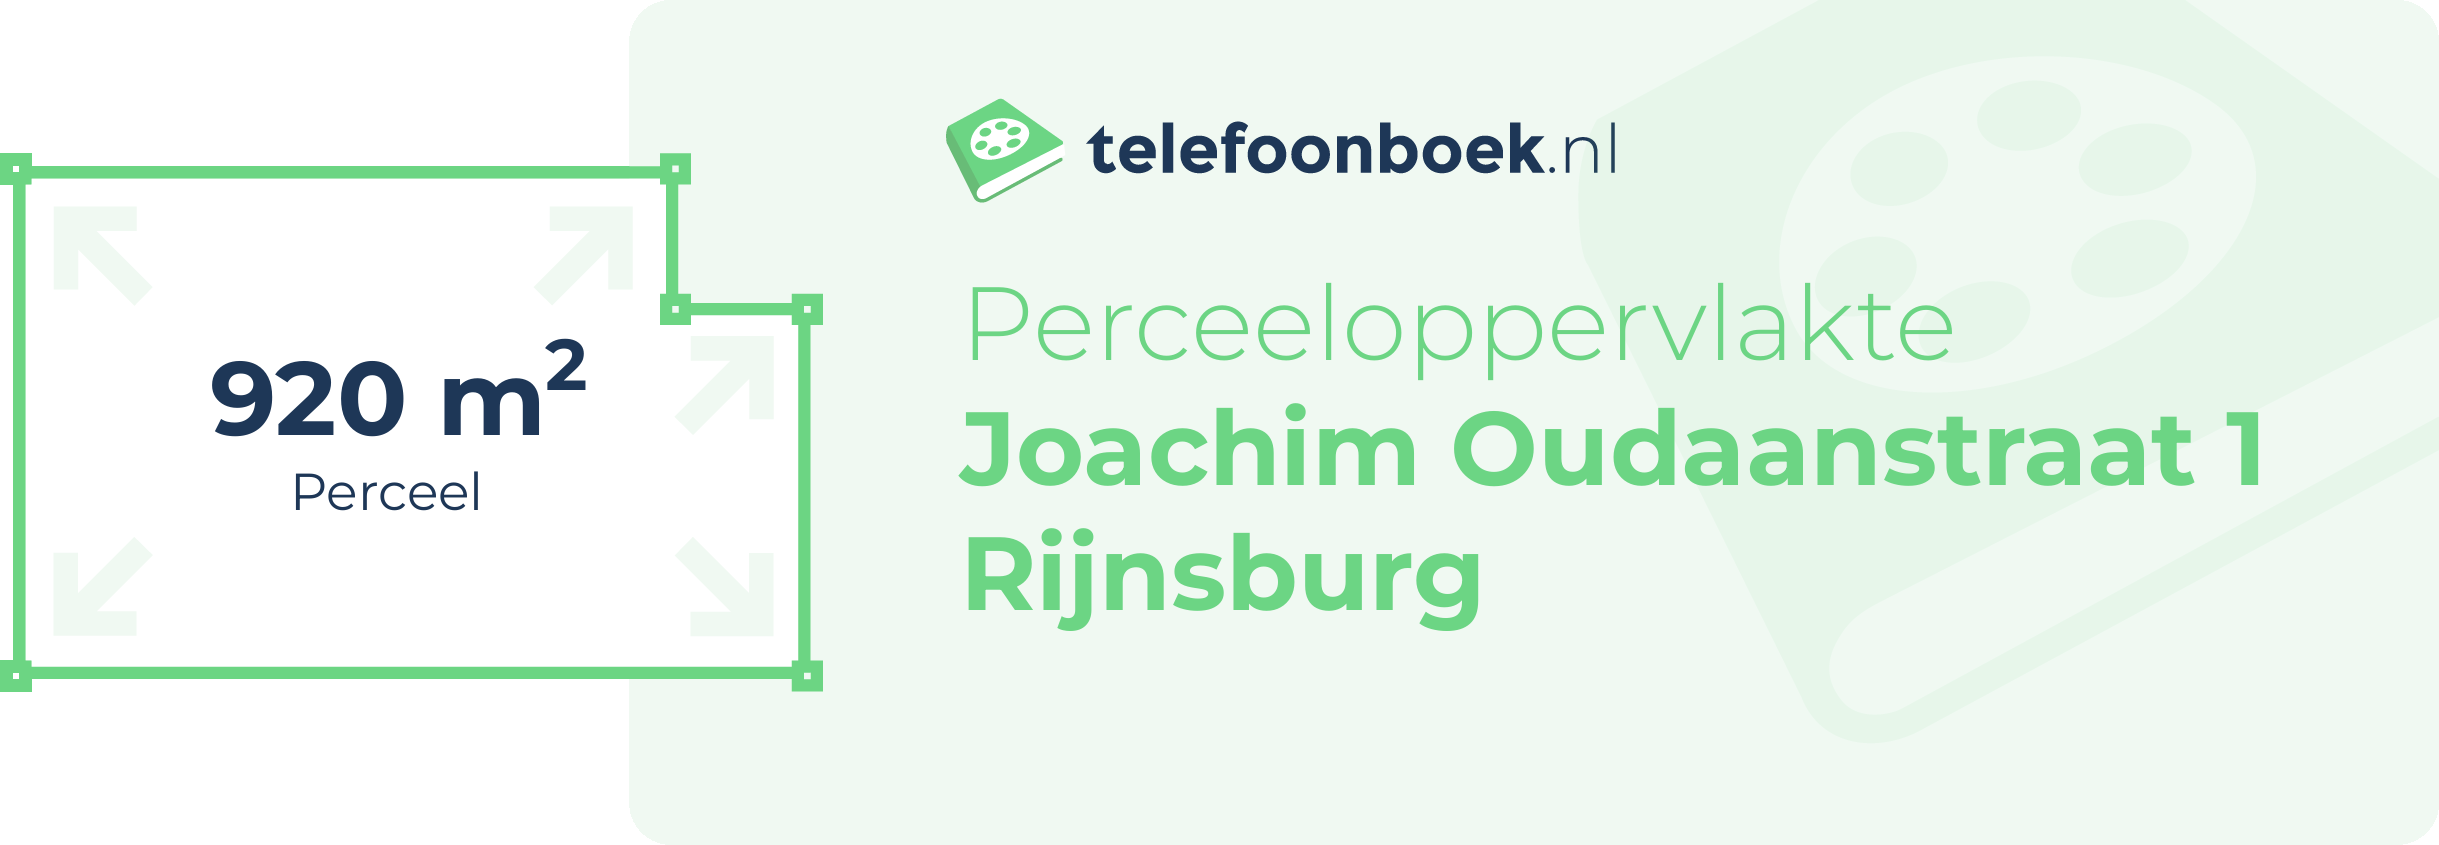 Perceeloppervlakte Joachim Oudaanstraat 1 Rijnsburg